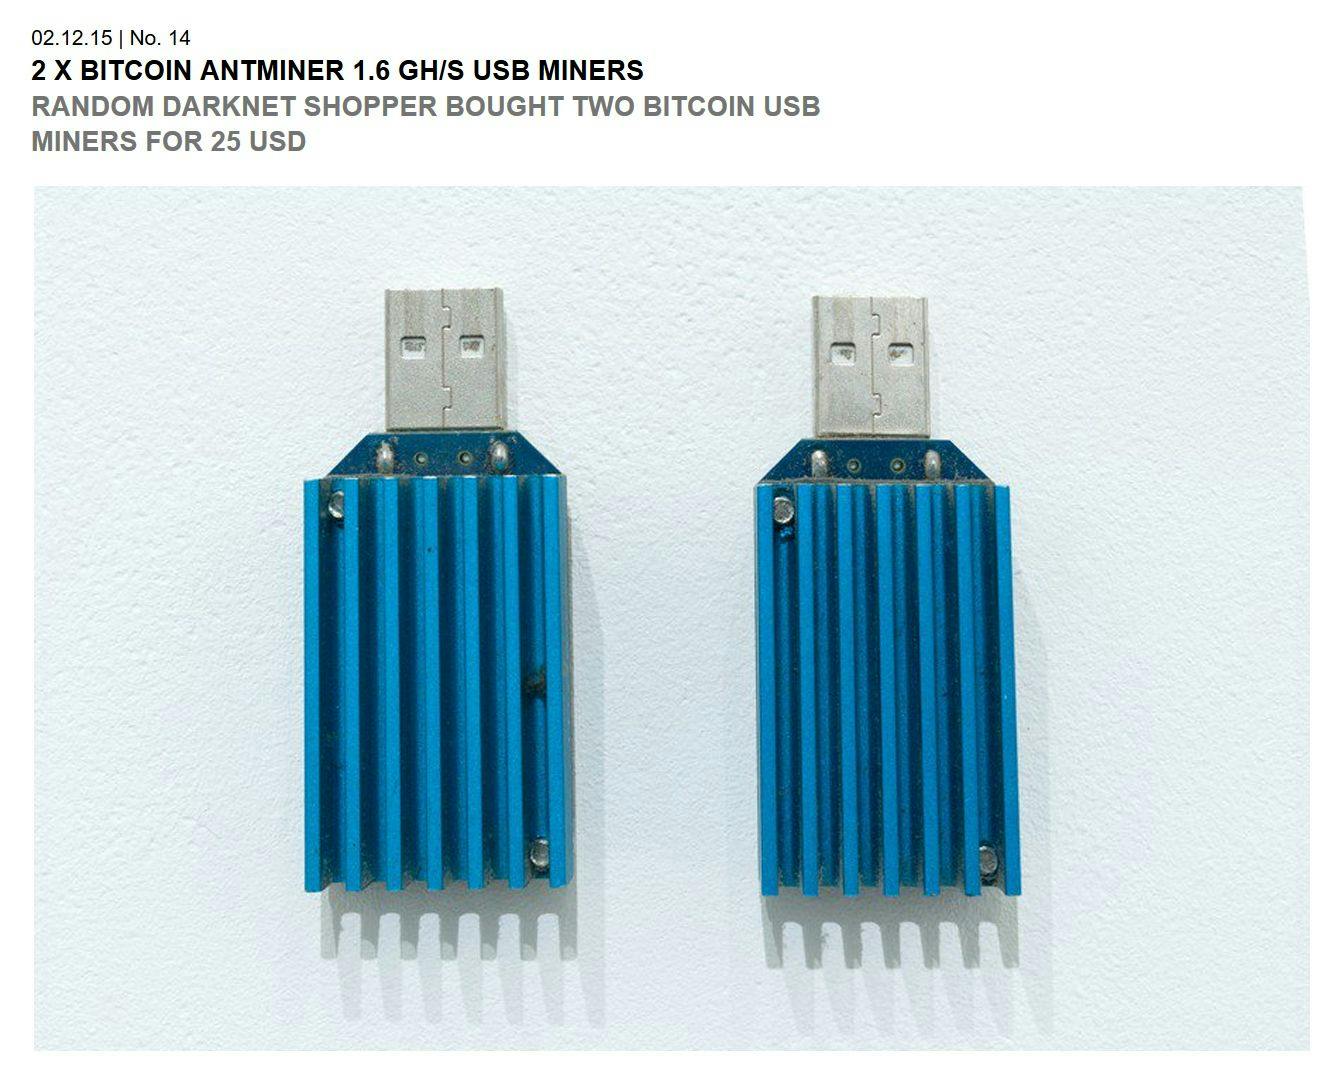 2 x Bitcoin Antminer 1.6 gH/s USB miners ordered by Random Darknet Shopper (02 Dec 15), !Mediengruppe Bitnik 